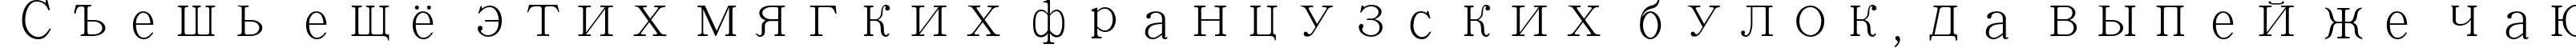 Пример написания шрифтом Adobe Ming Std L текста на русском